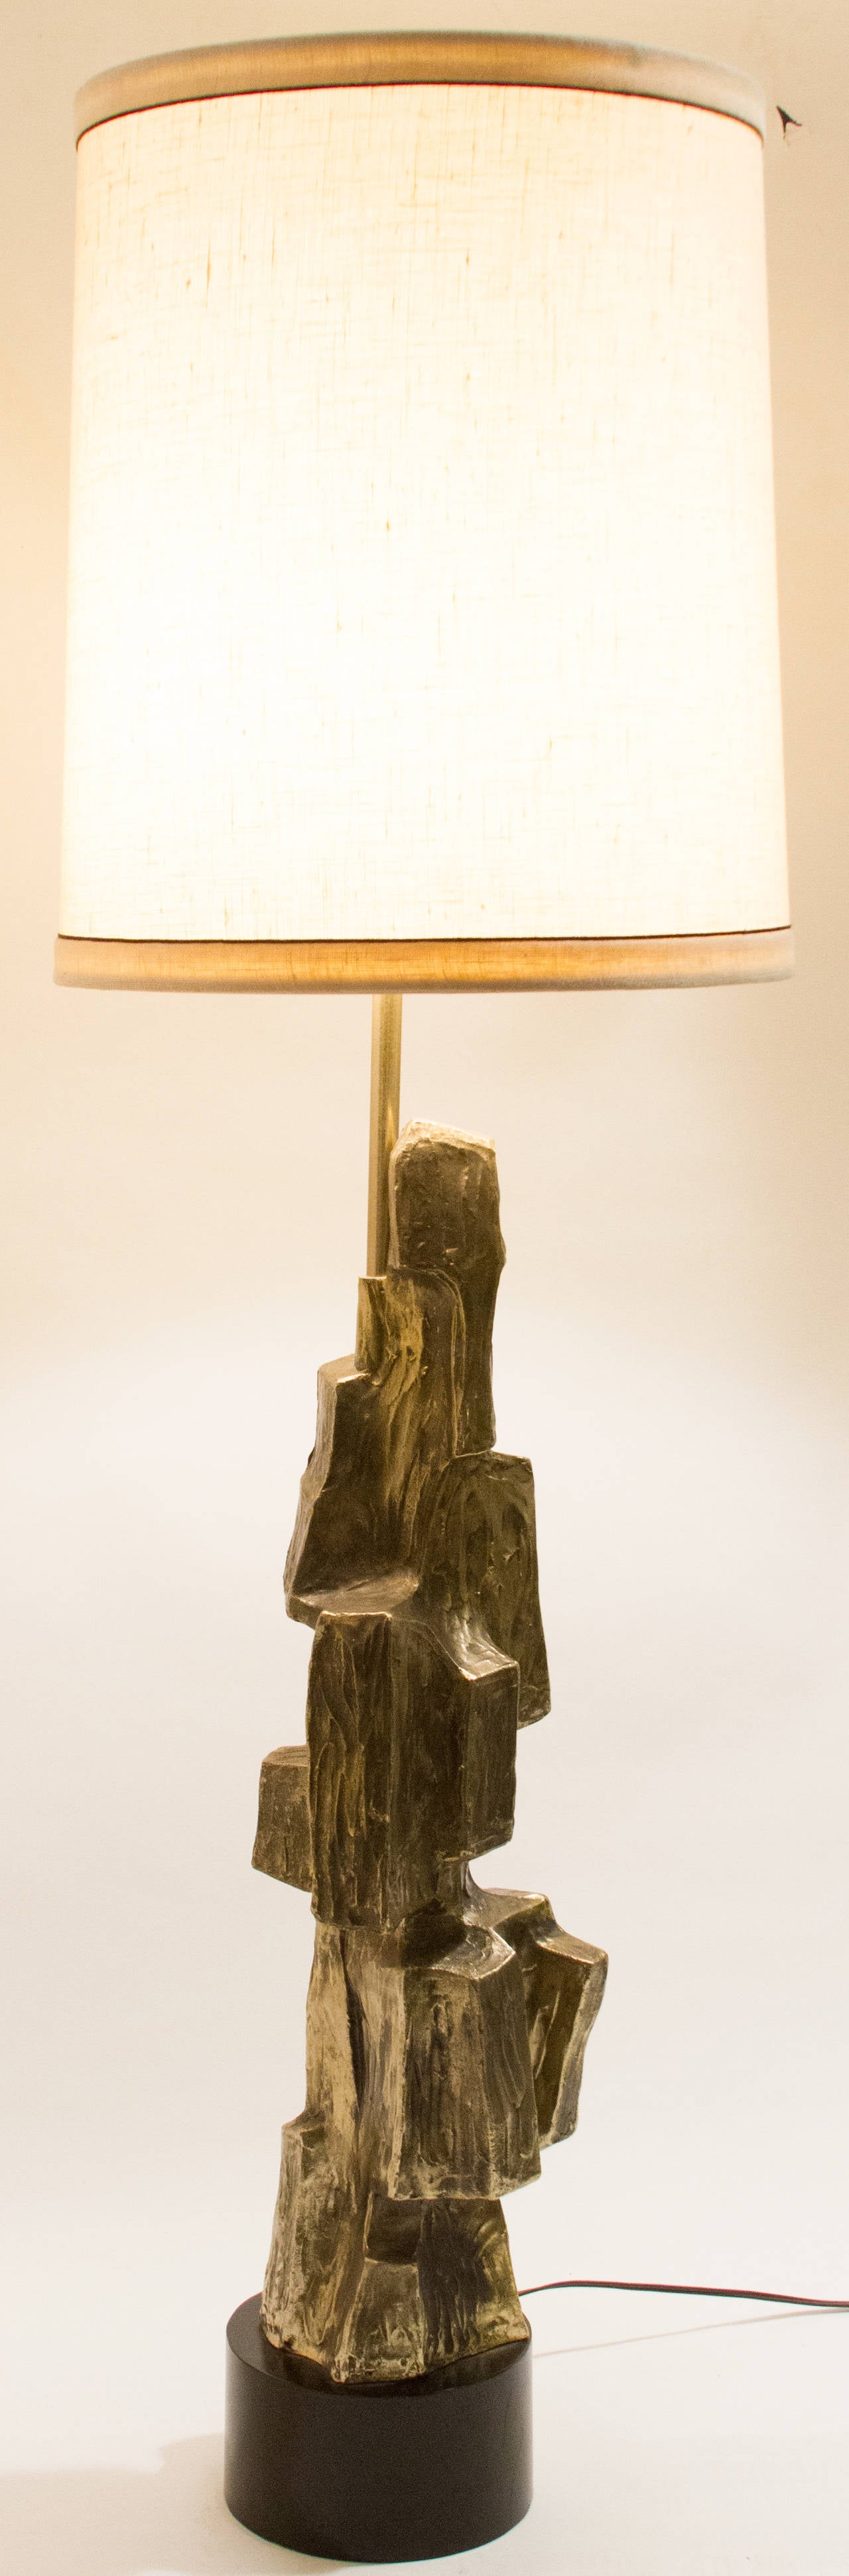 Mid-20th Century Tall Sculptural Brutalist Lamp 